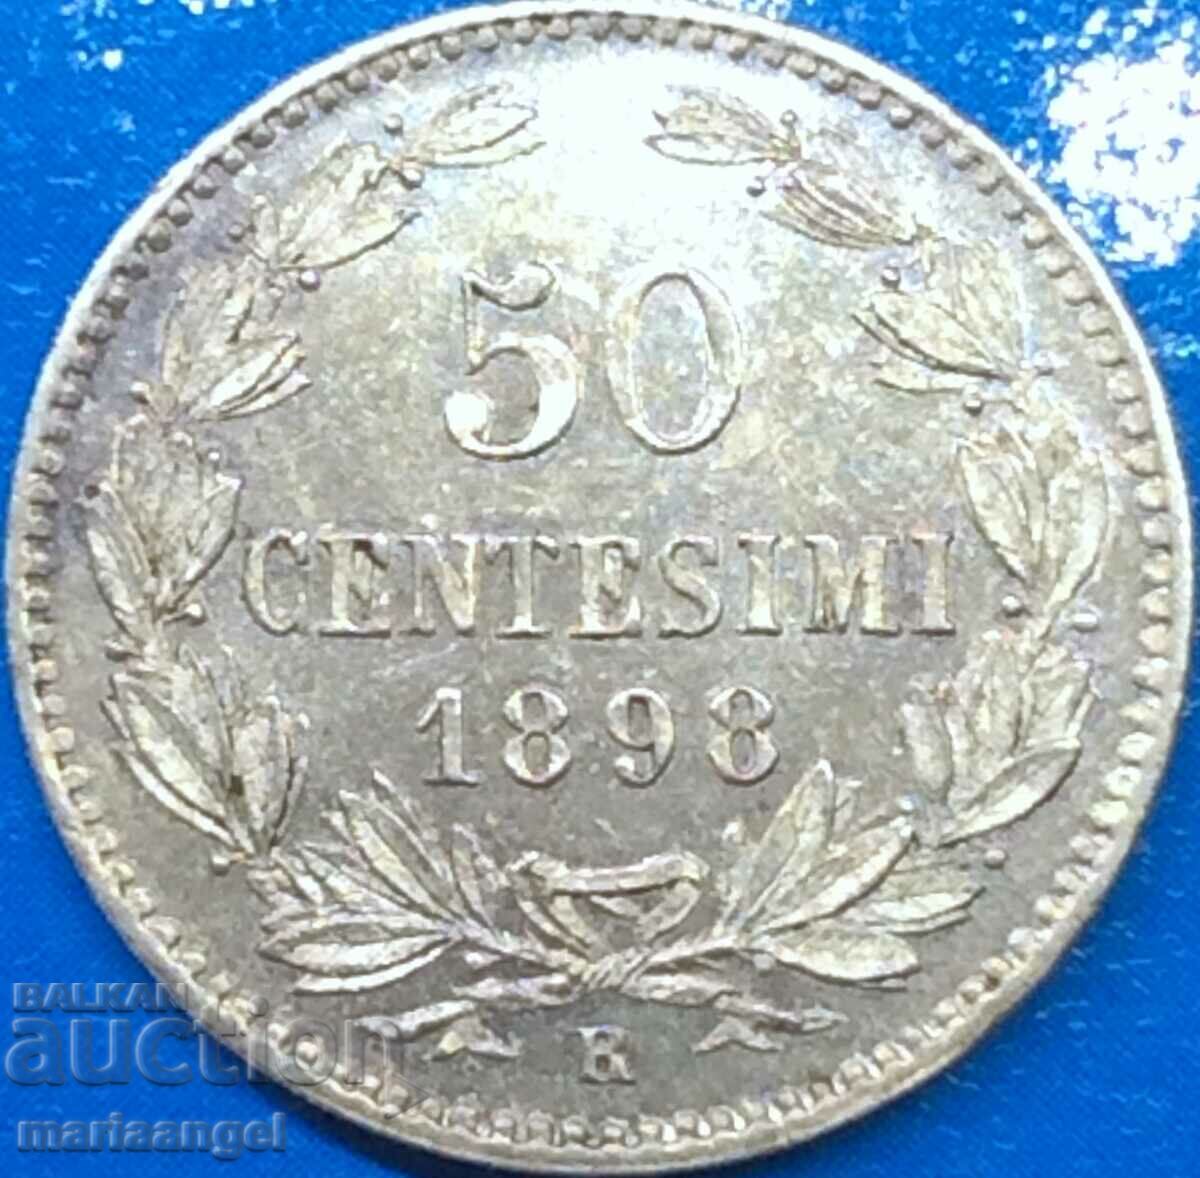 50 centesimi 1898 San Marino UNC PROOF-like argint